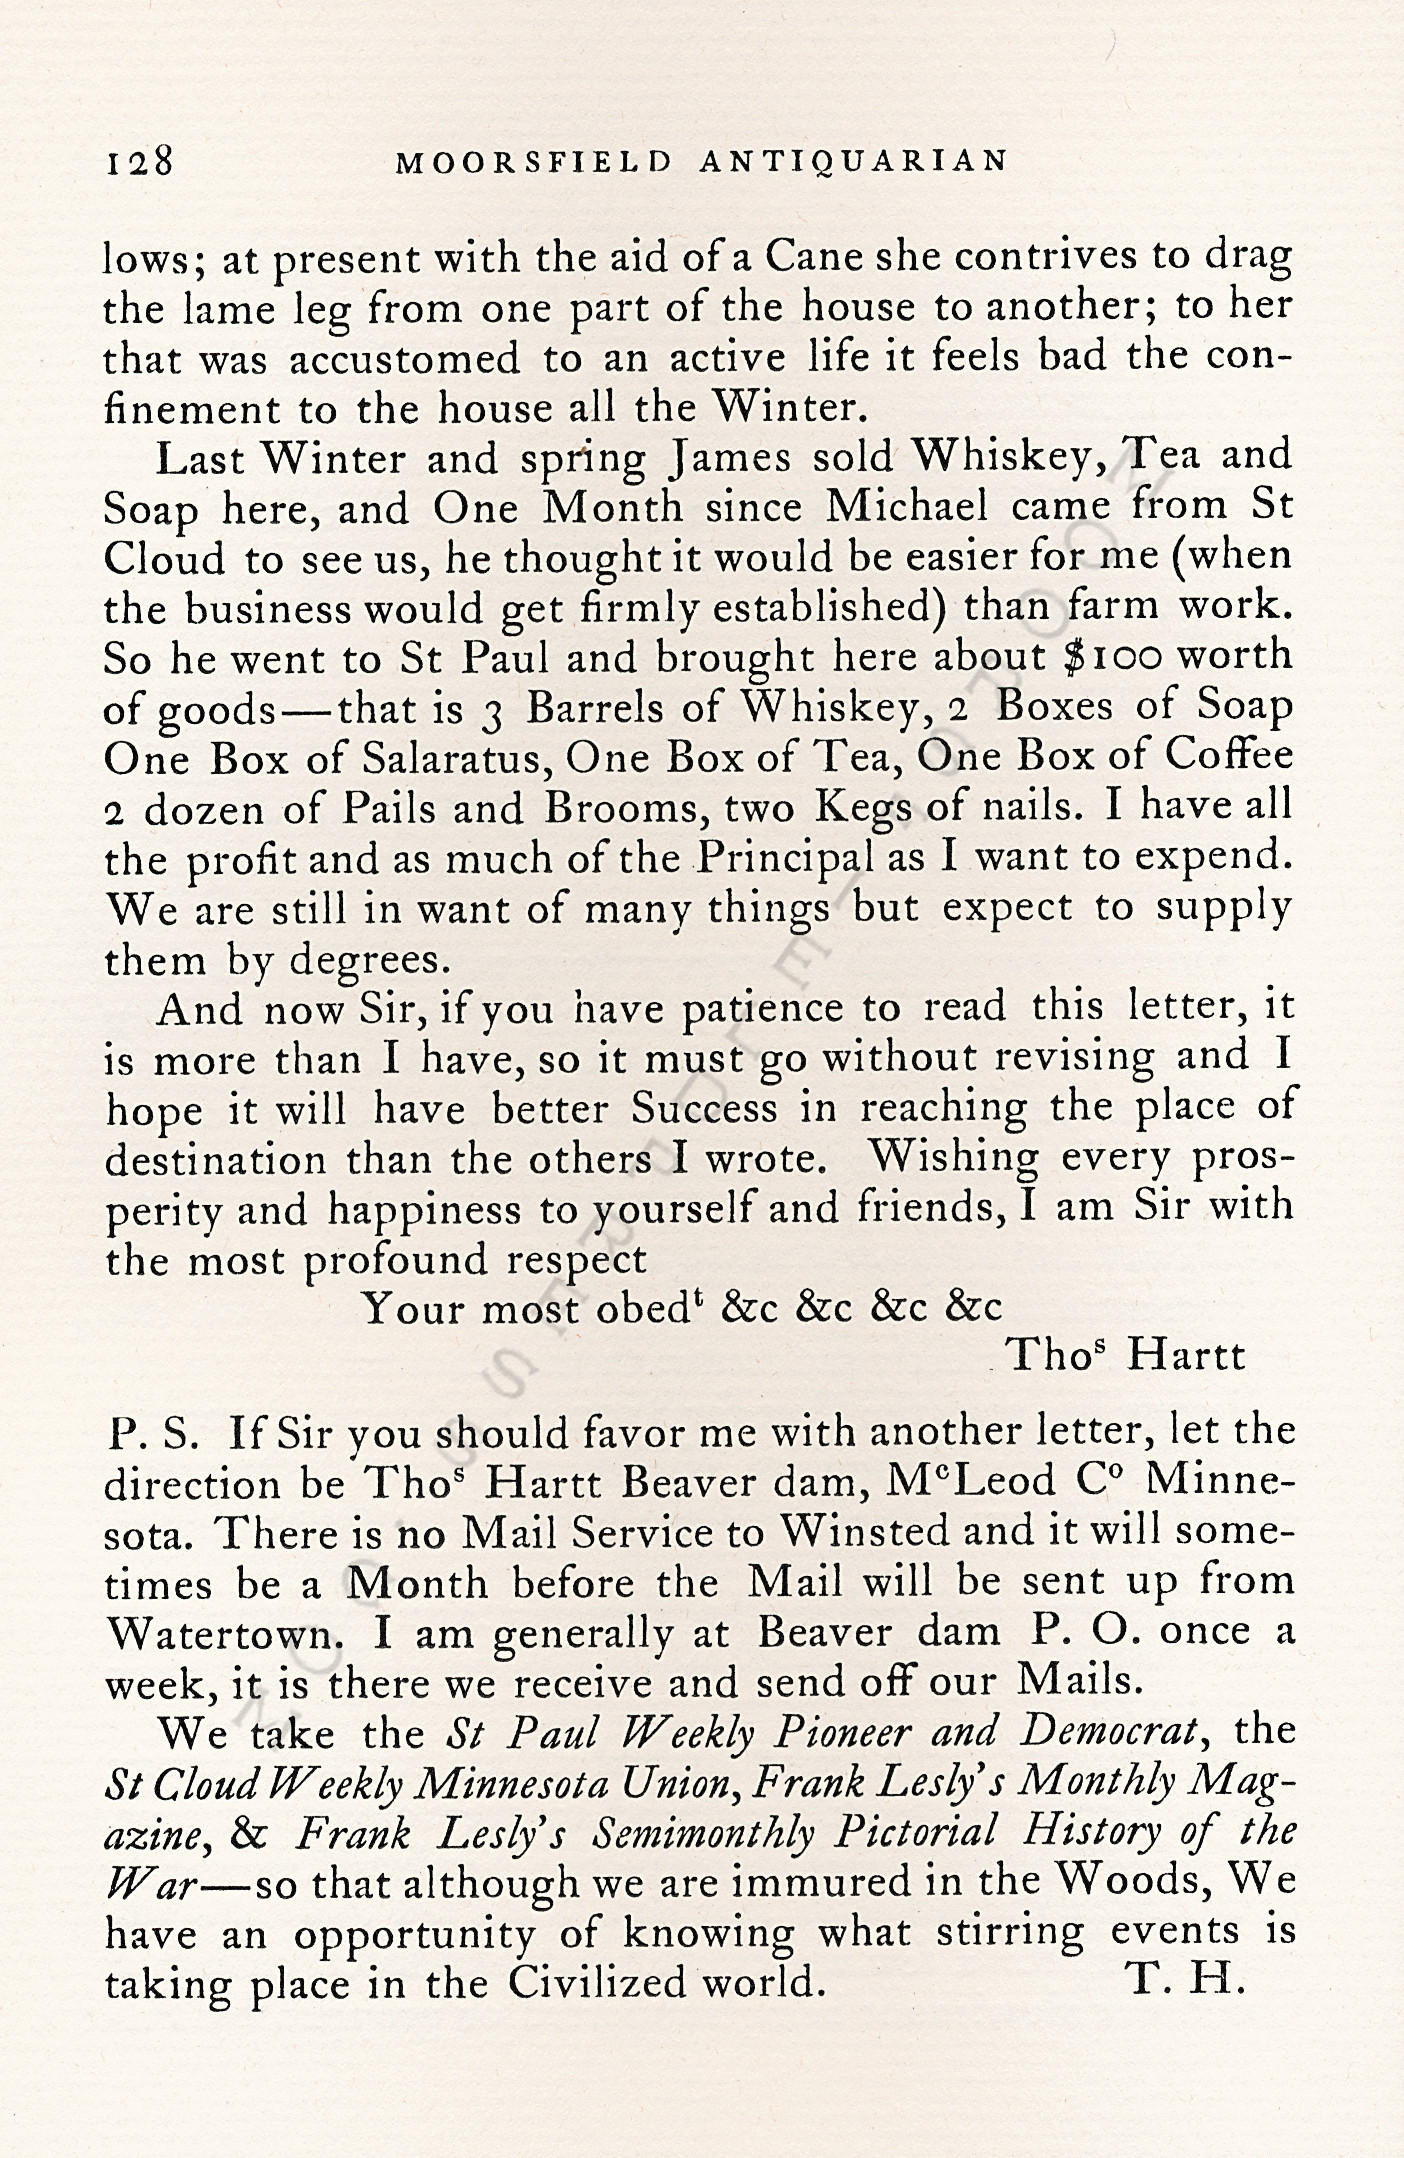 A
                      Minnesota Farmer in 1862-Thomas Hartt to Freeman
                      Nye of Champlain, New York